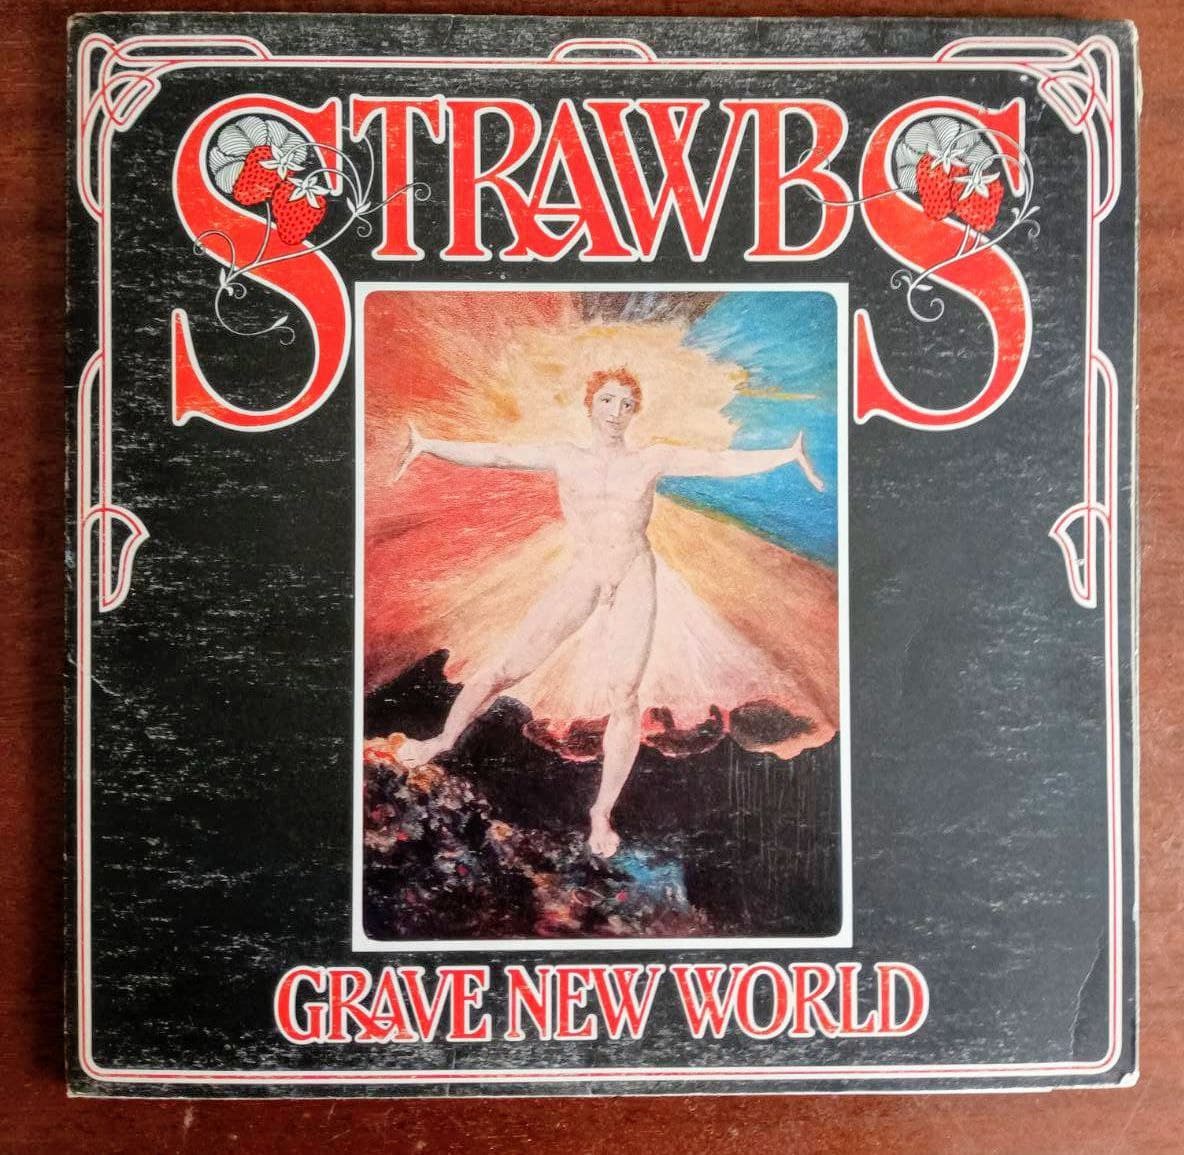 Strawbs - "Grave New World": Как прекрасен этот мир?